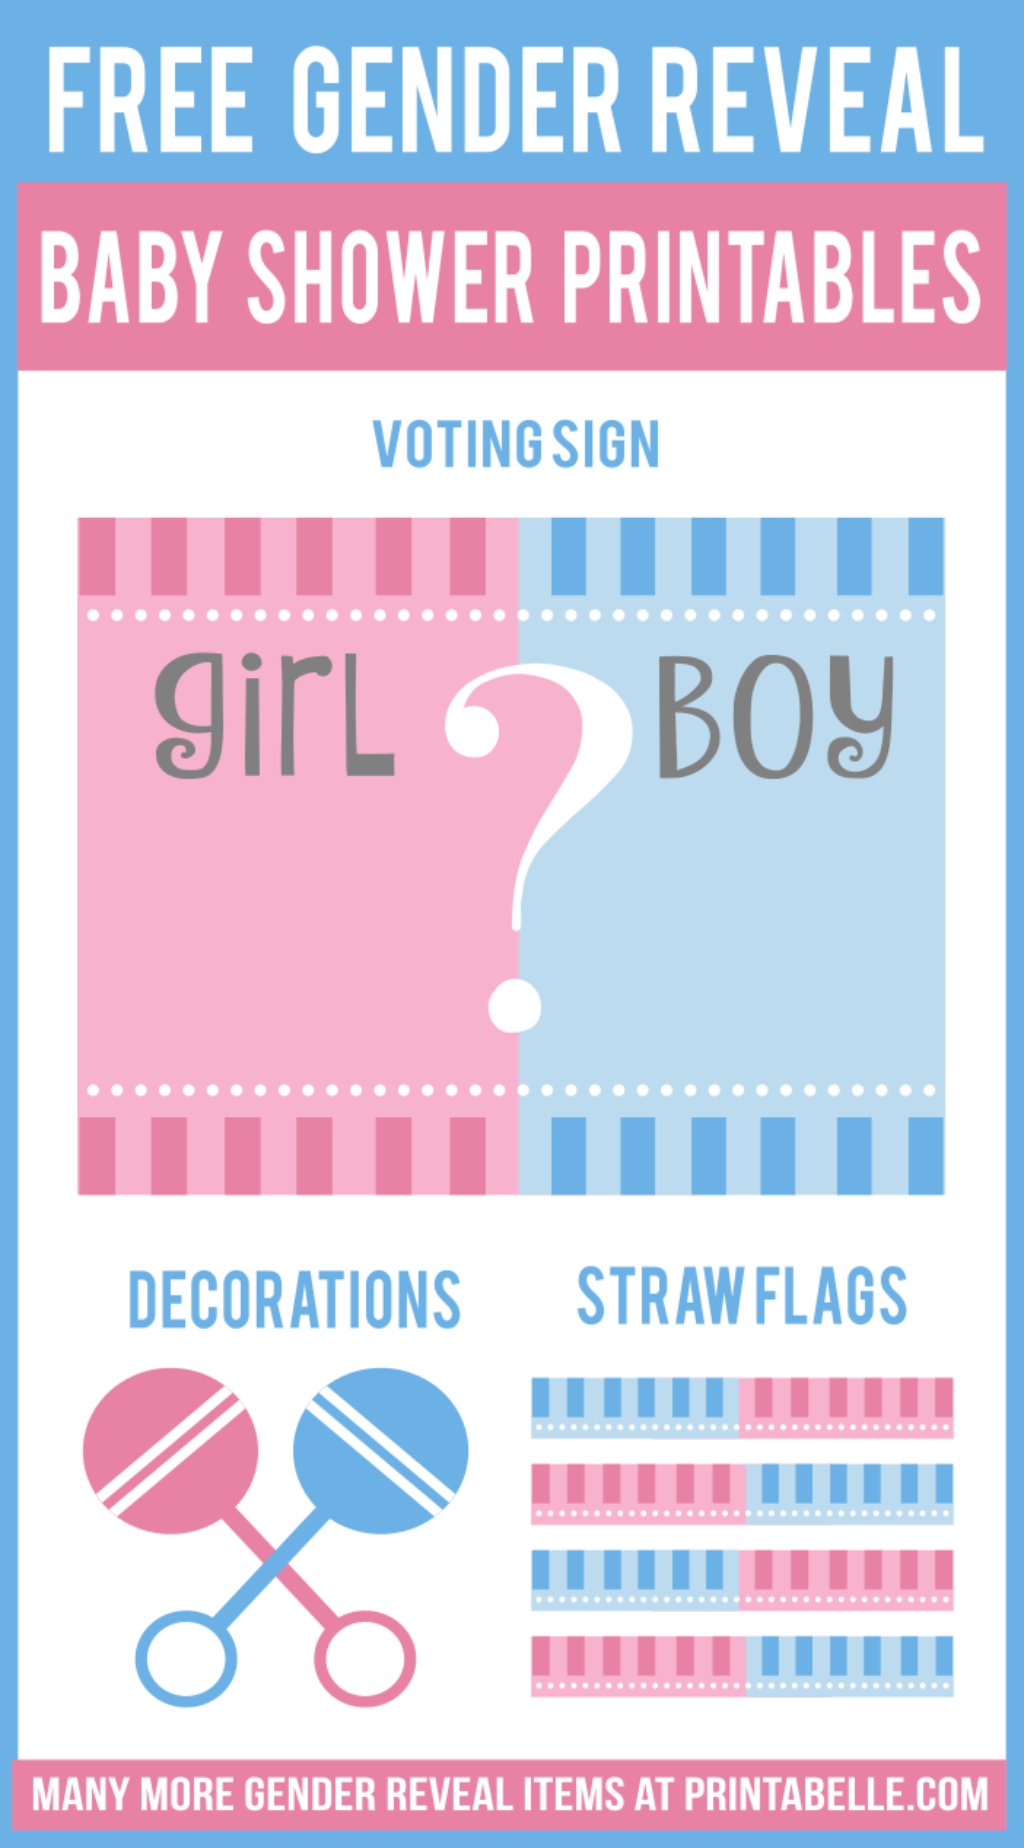 Gender Reveal Baby Shower Question Printables | Free Party - Free Gender Reveal Printables